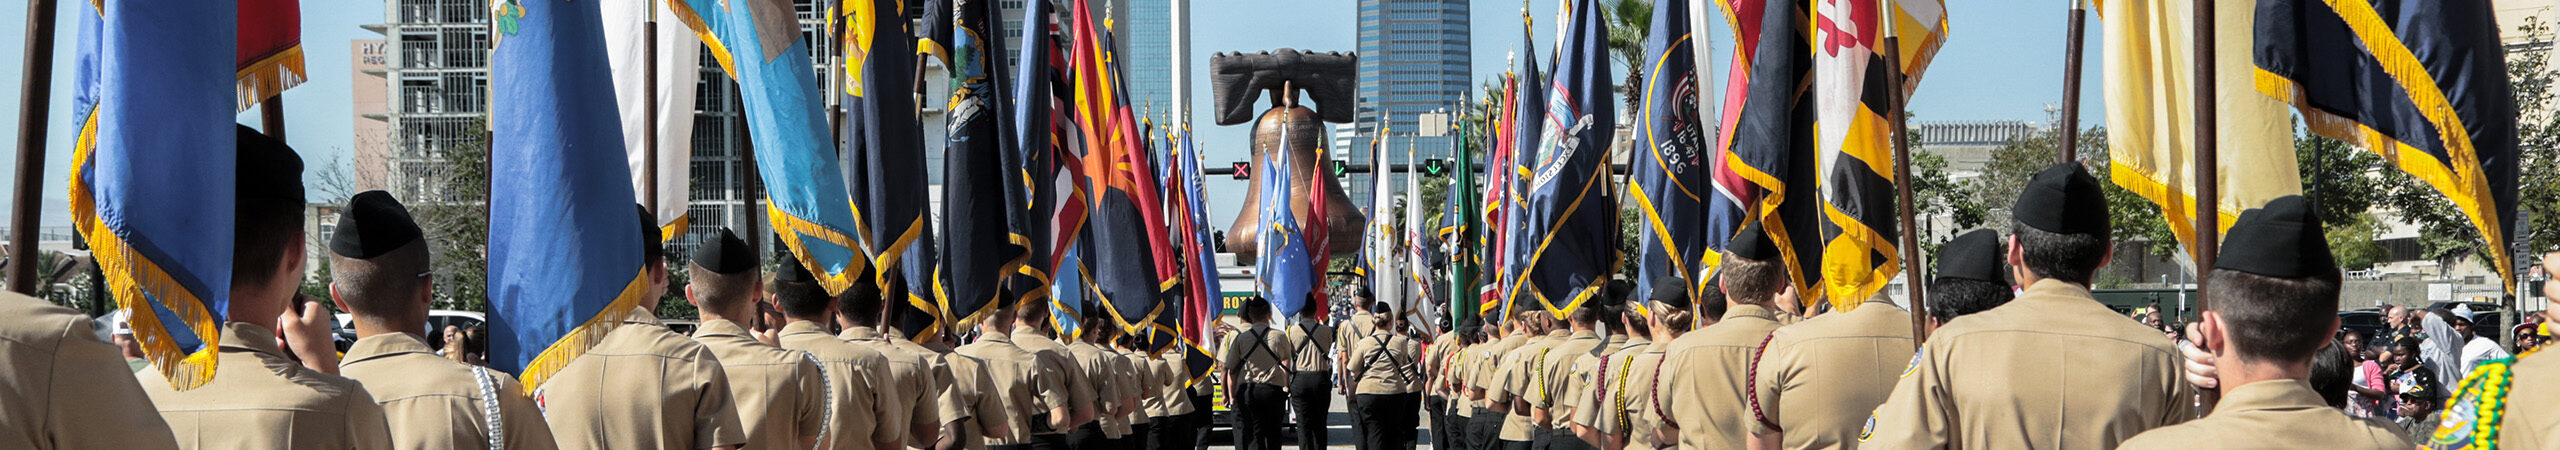 Jacksonville Veterans’ Day Parade 2015